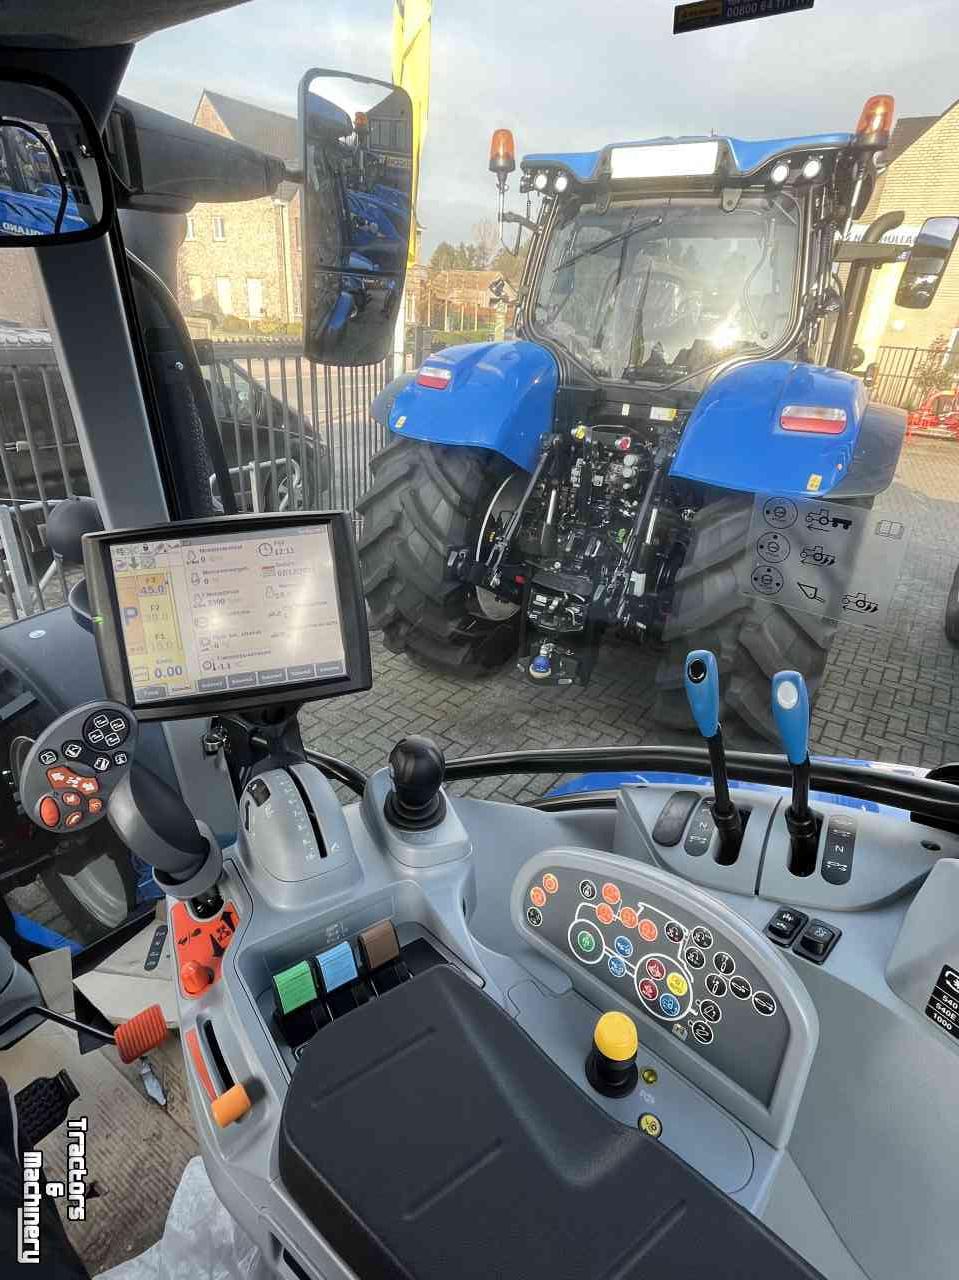 Traktoren New Holland T5.110 AC